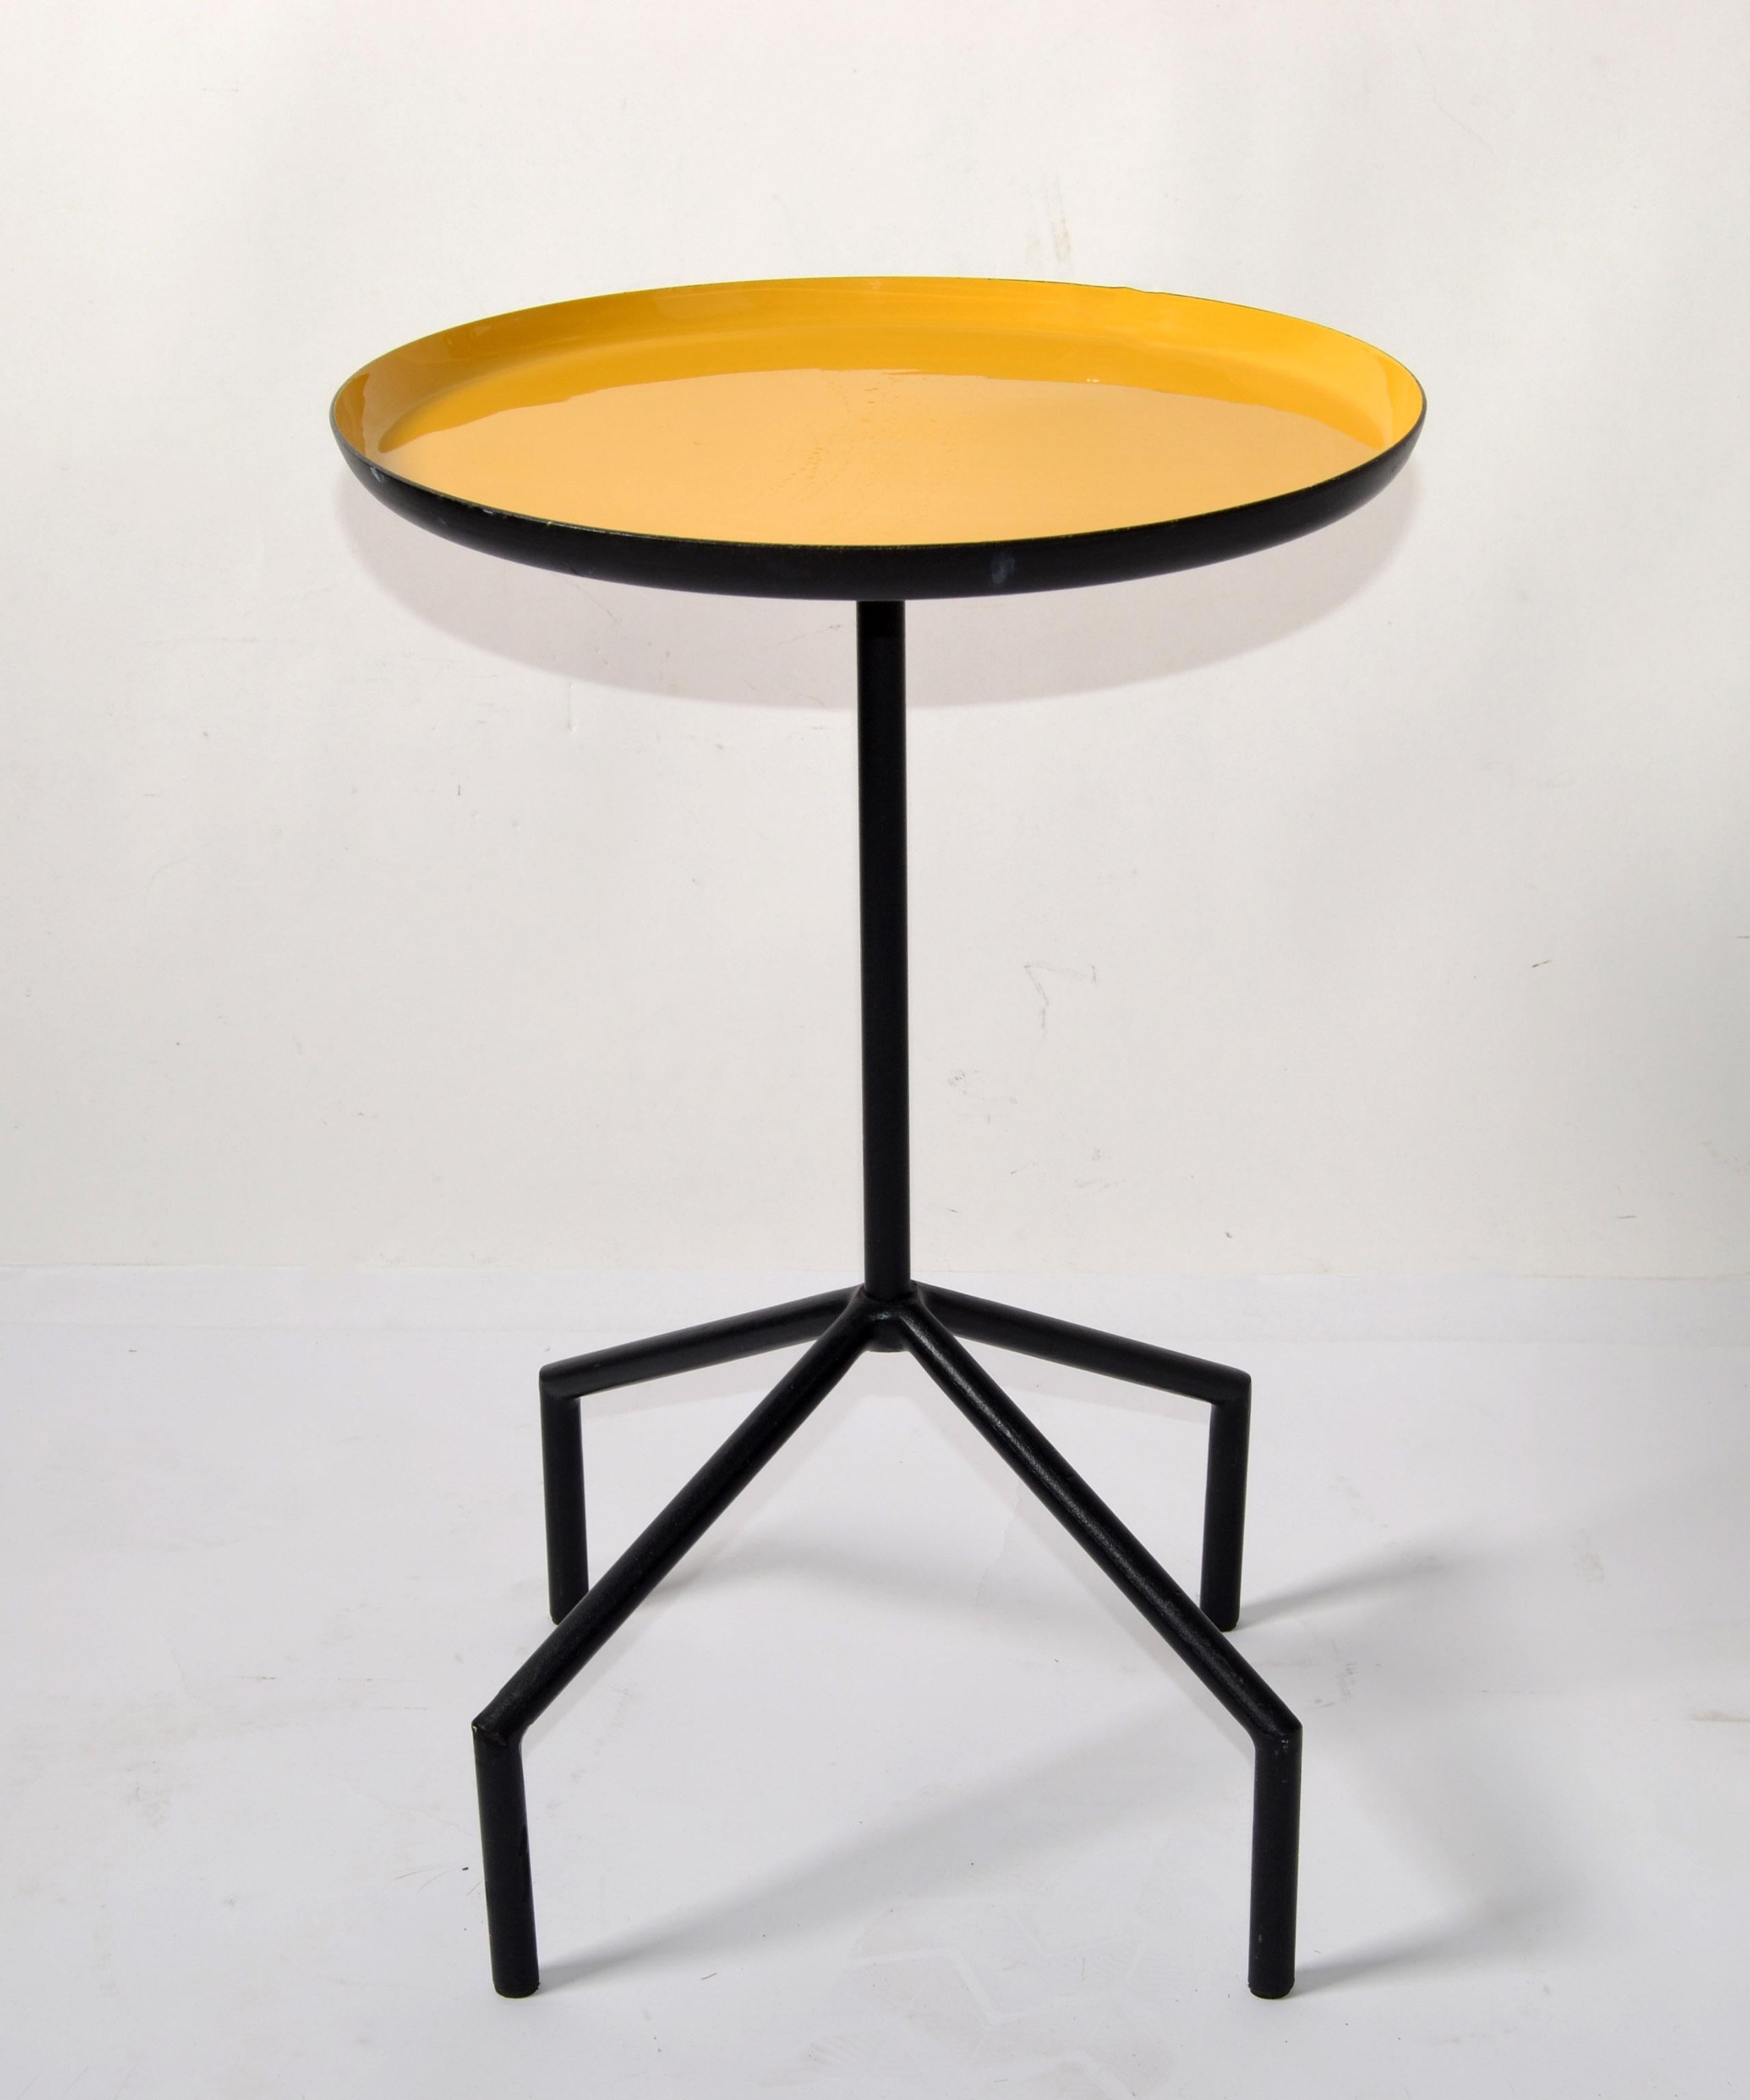 1980 Herman Miller Style Yellow Enamel Tray Side Table Black Iron Gazelle Base For Sale 6